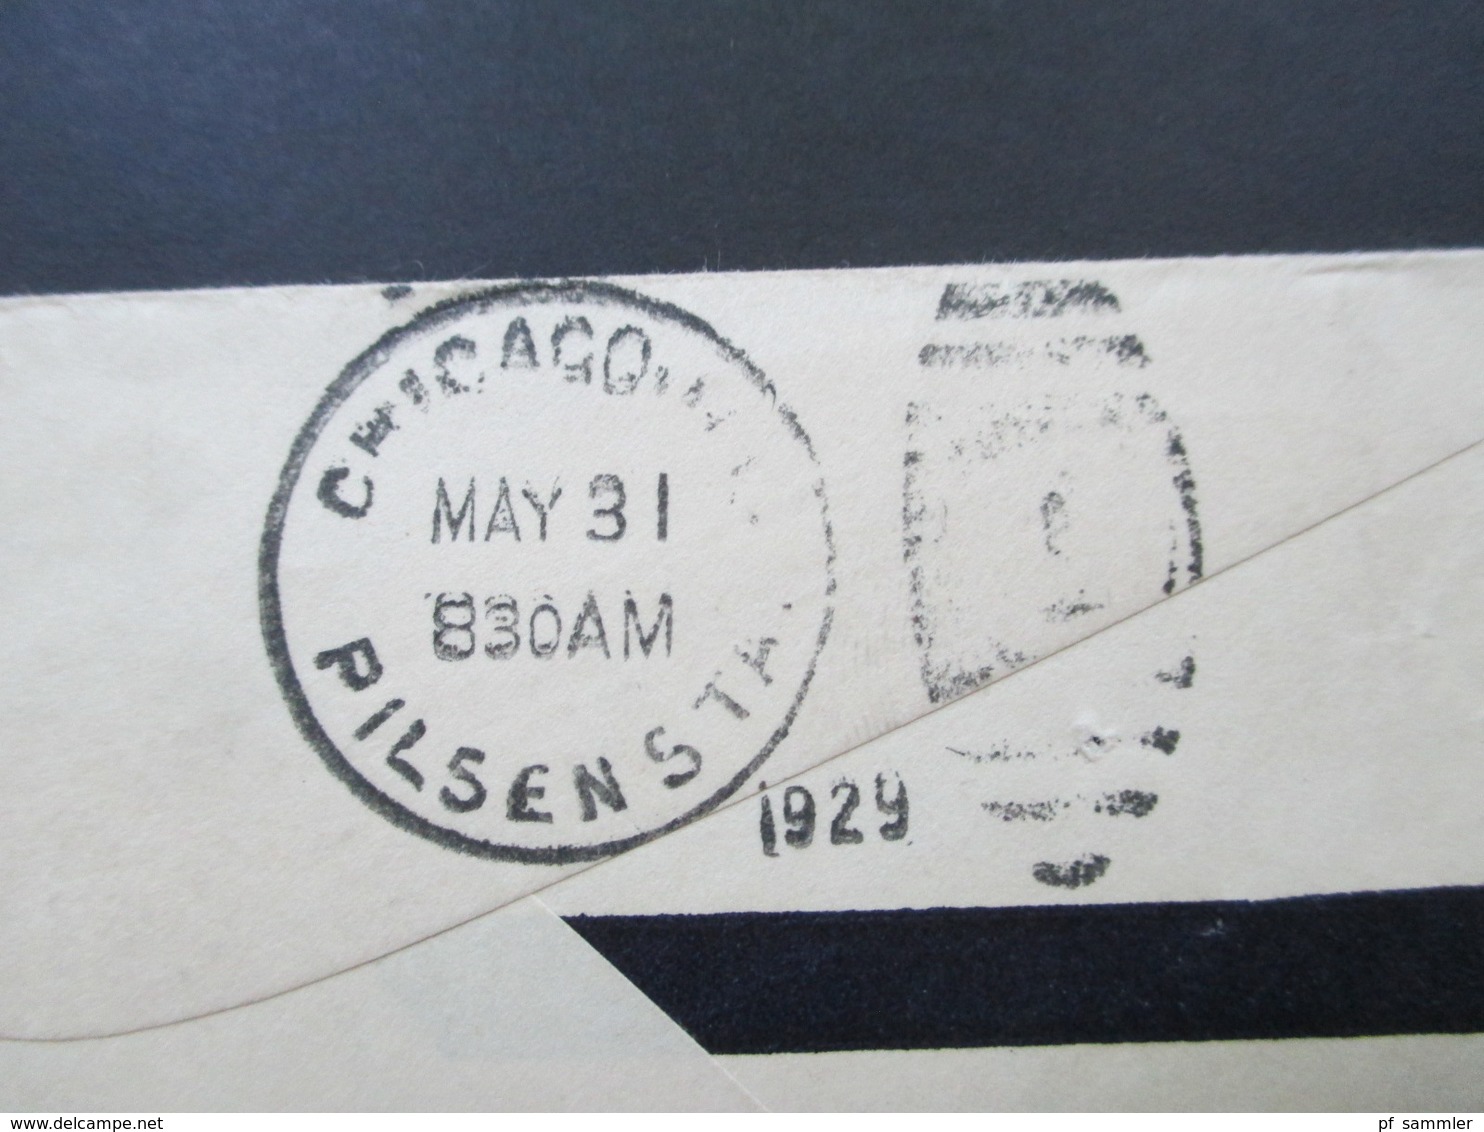 USA 1929 Flugpostmarke Nr. 310 EF Hotelpost Overland Hotel Reno, Nevada An Hotel Suppliers Chicago Stempel F-805 - Cartas & Documentos